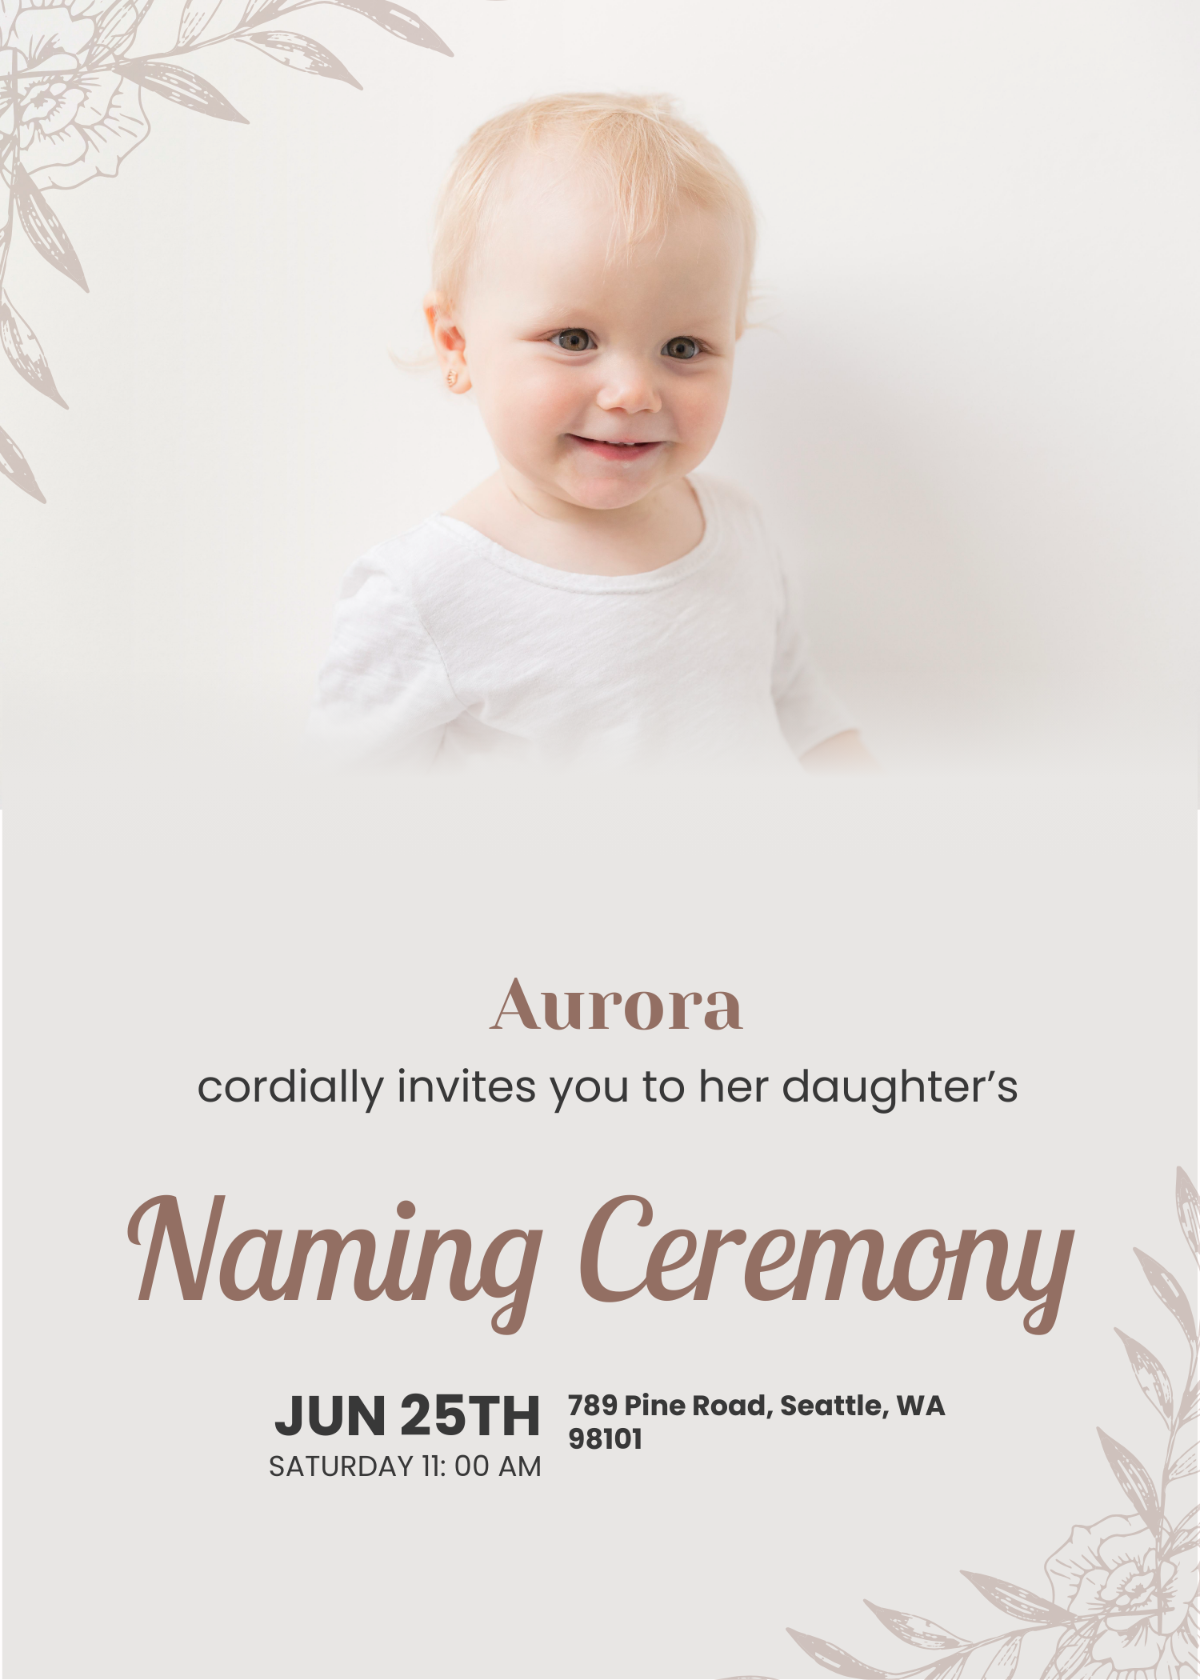 Naming Ceremony Invitation Card